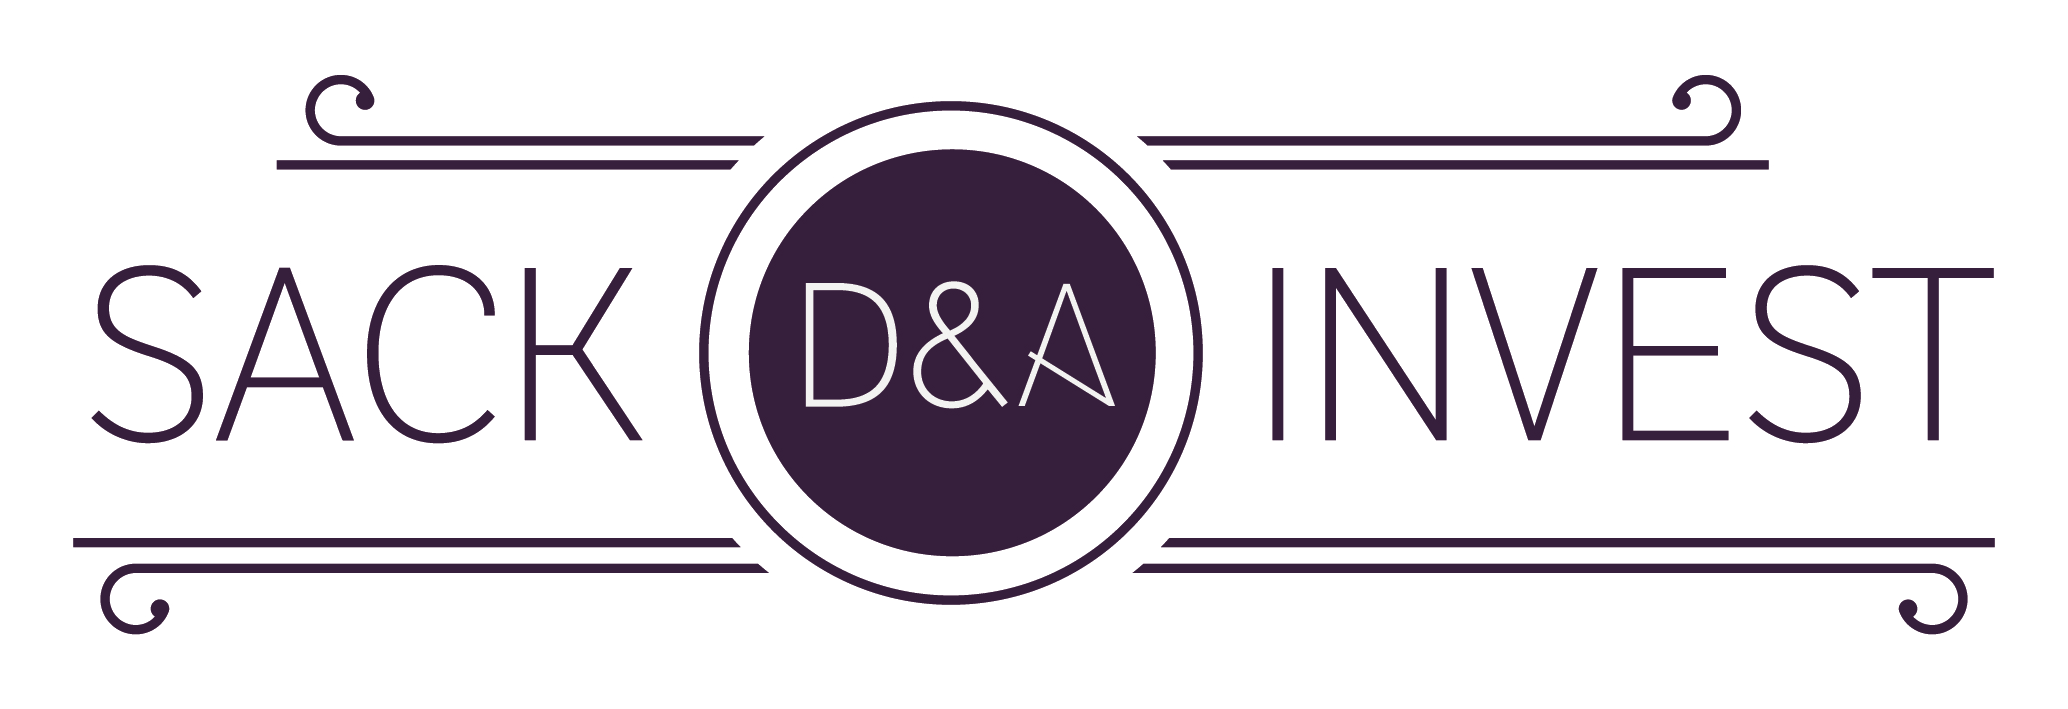 Sack D&A invest - logo